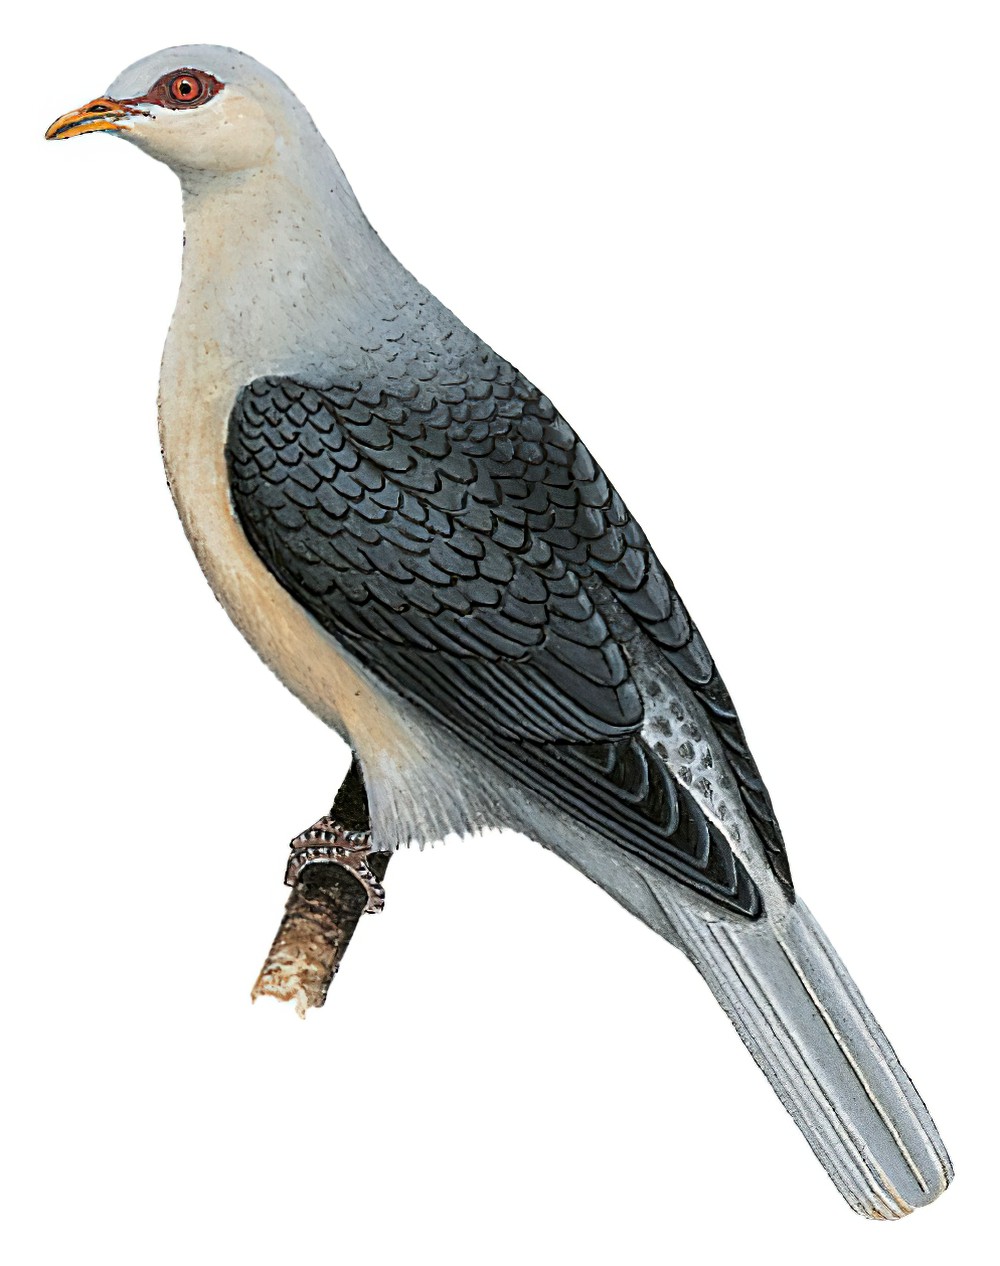 Pale Mountain-Pigeon / Gymnophaps solomonensis